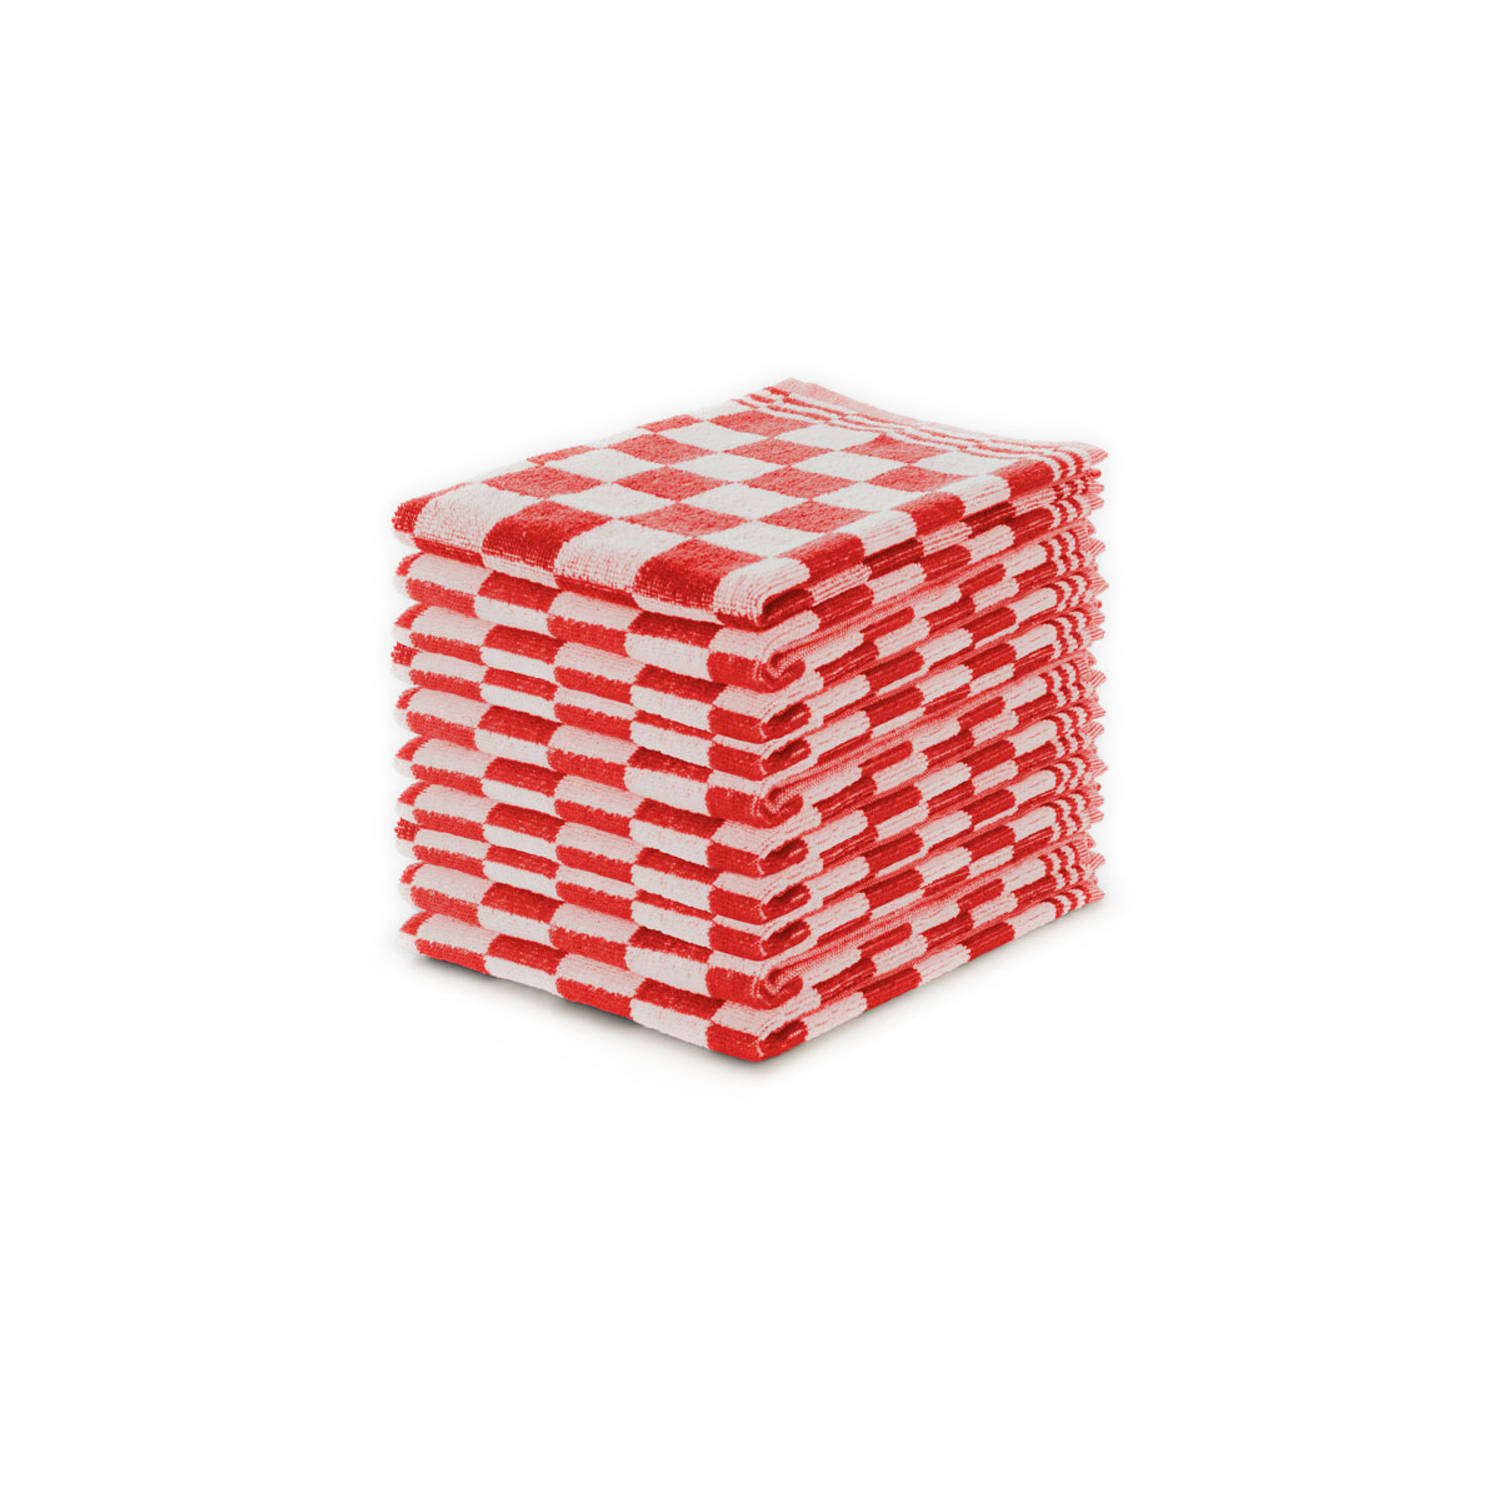 Elegance Keukendoekset Blok 50x50cm - rood - set van 10